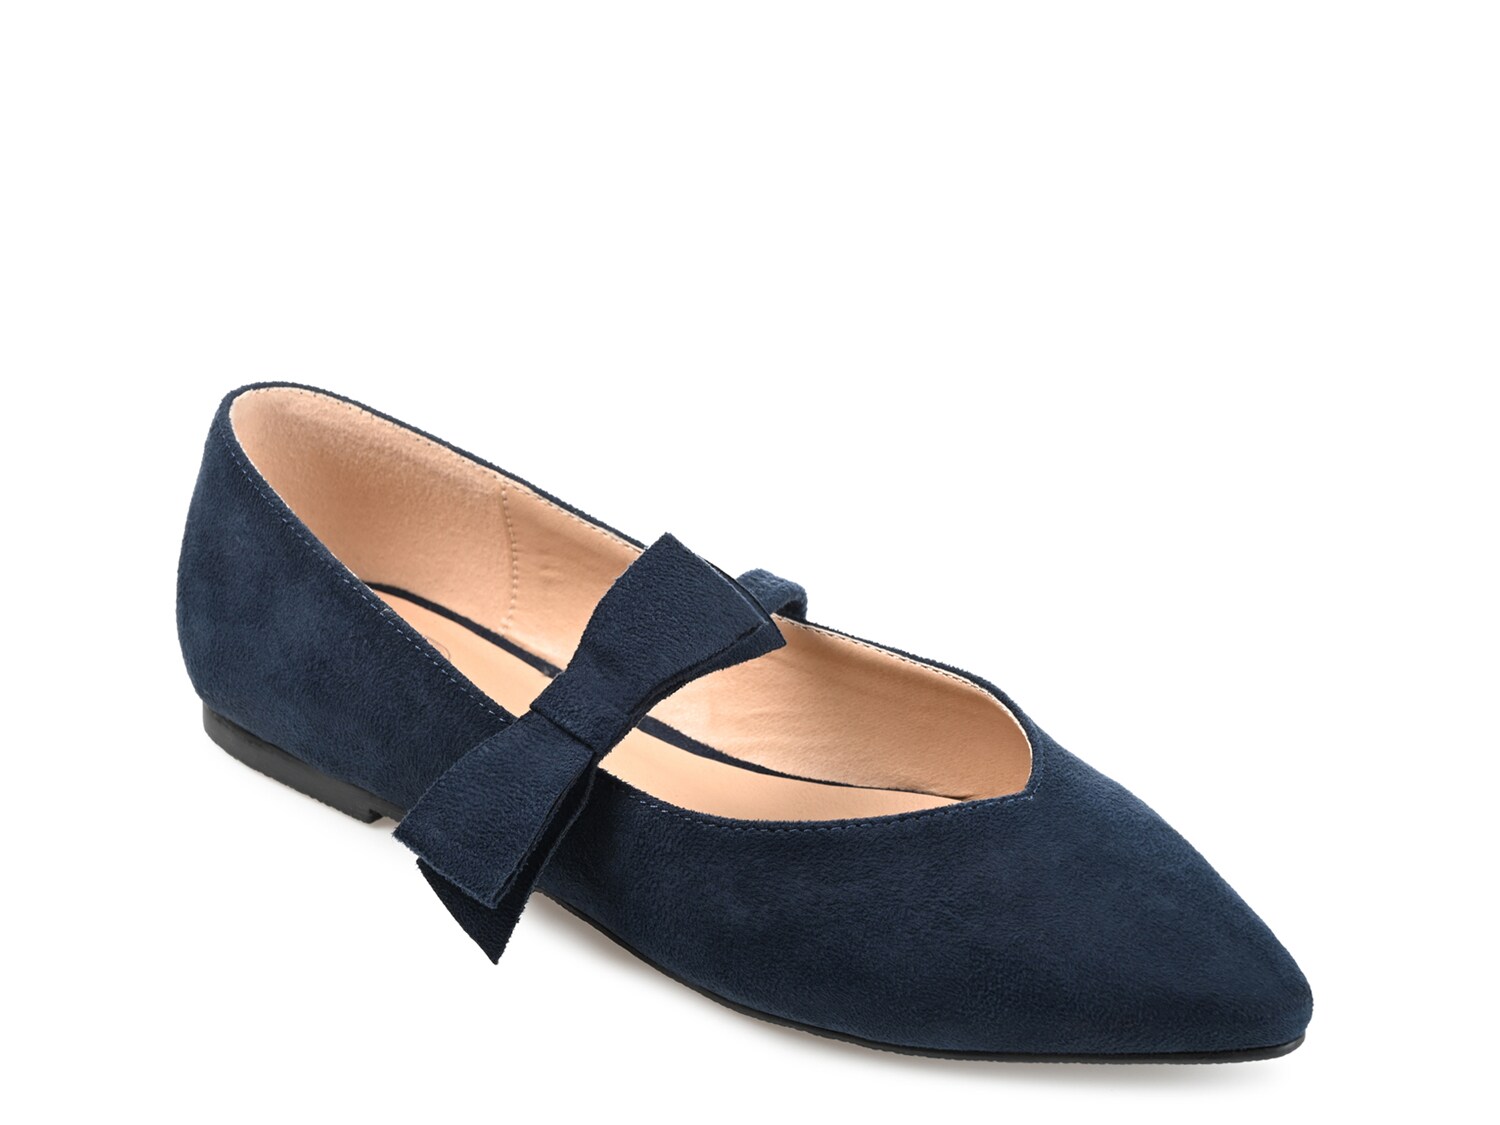 Балетки Journee Collection Aizlynn, темно-синий туфли на плоской подошве sas eden comfort mary jane цвет resin